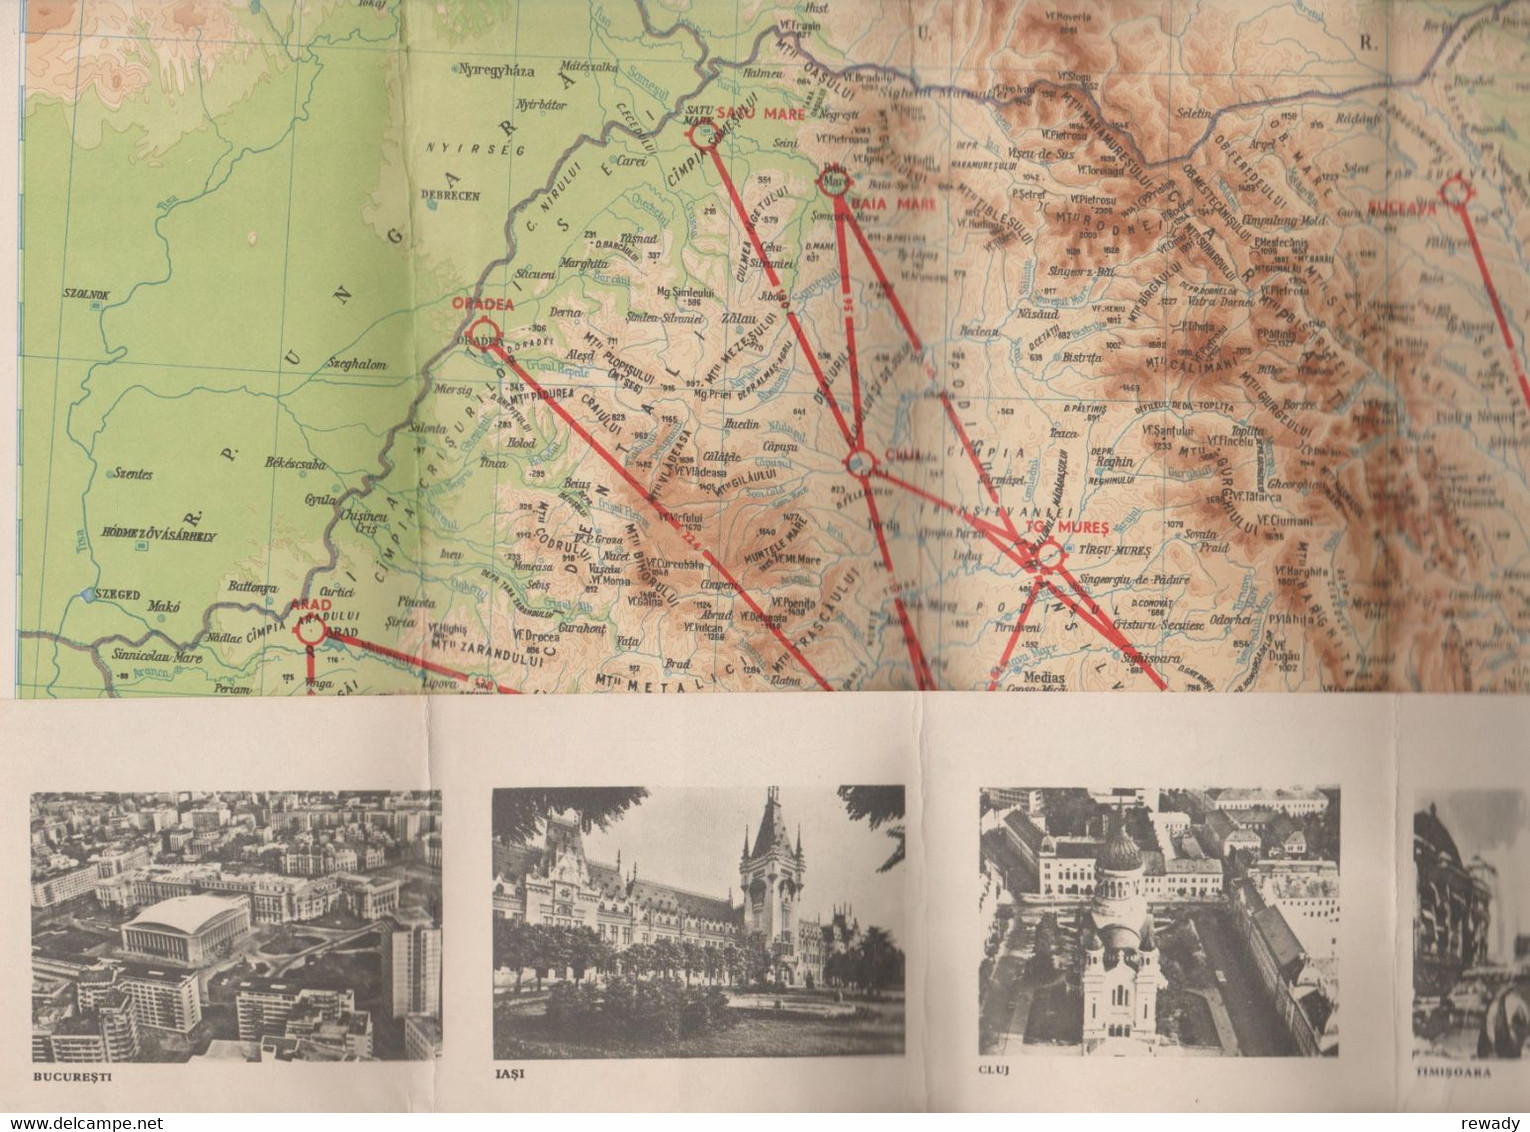 TAROM - Rute Interne / Vintage Flight Route Map / Agentii Romania - Magazines Inflight